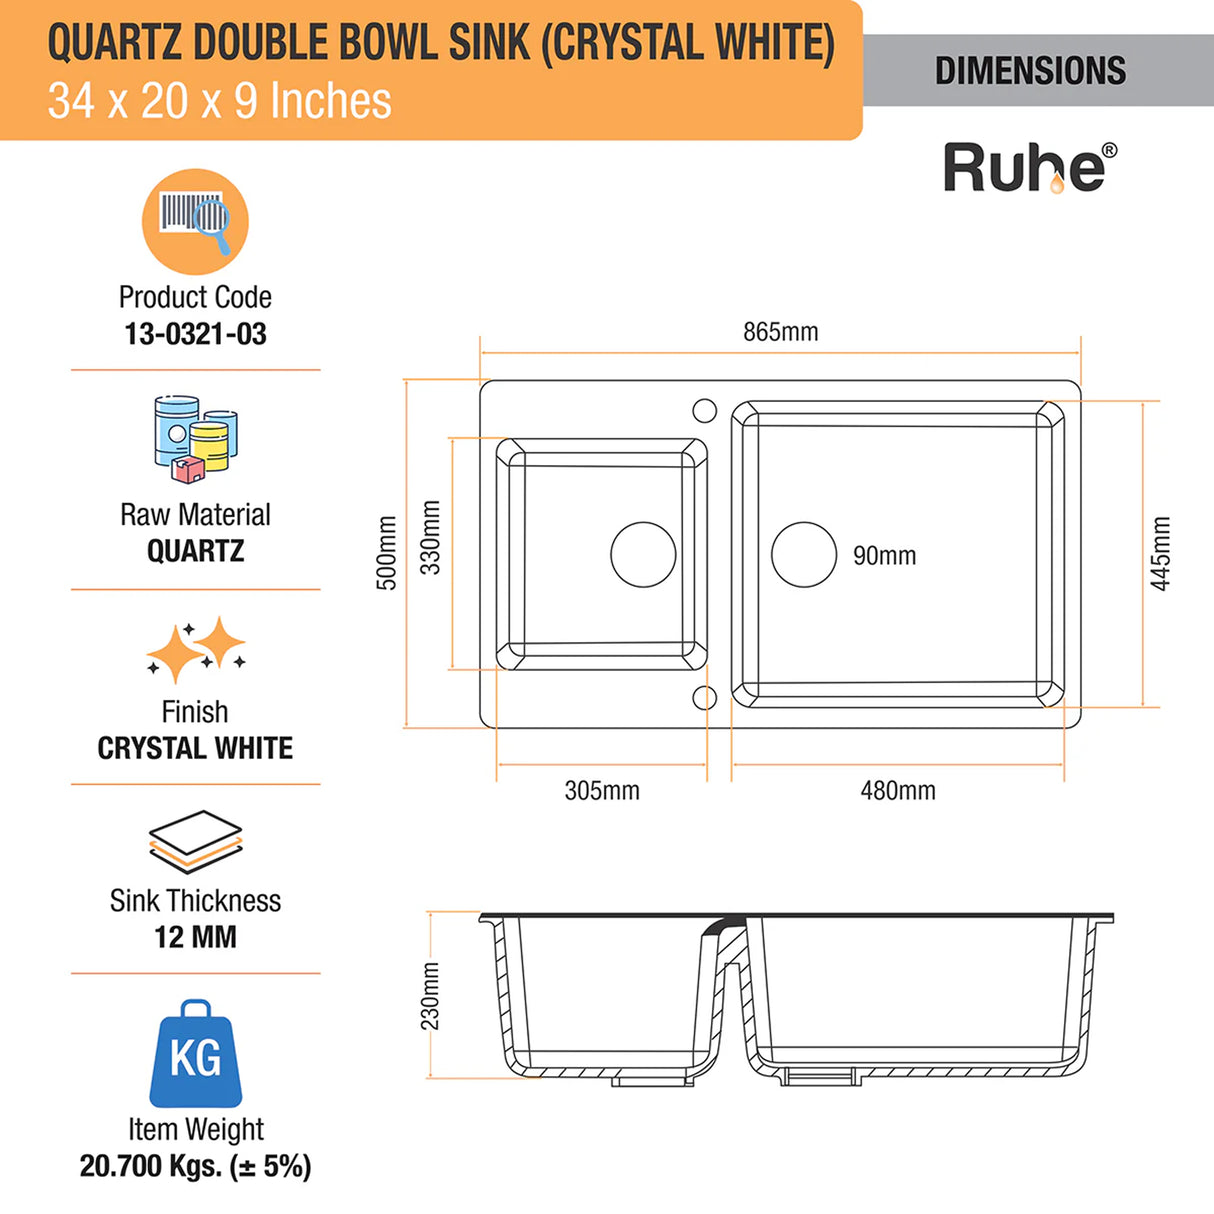 Quartz Double Bowl Kitchen Sink - Crystal White (34 x 20 x 9 inches) - by Ruhe®